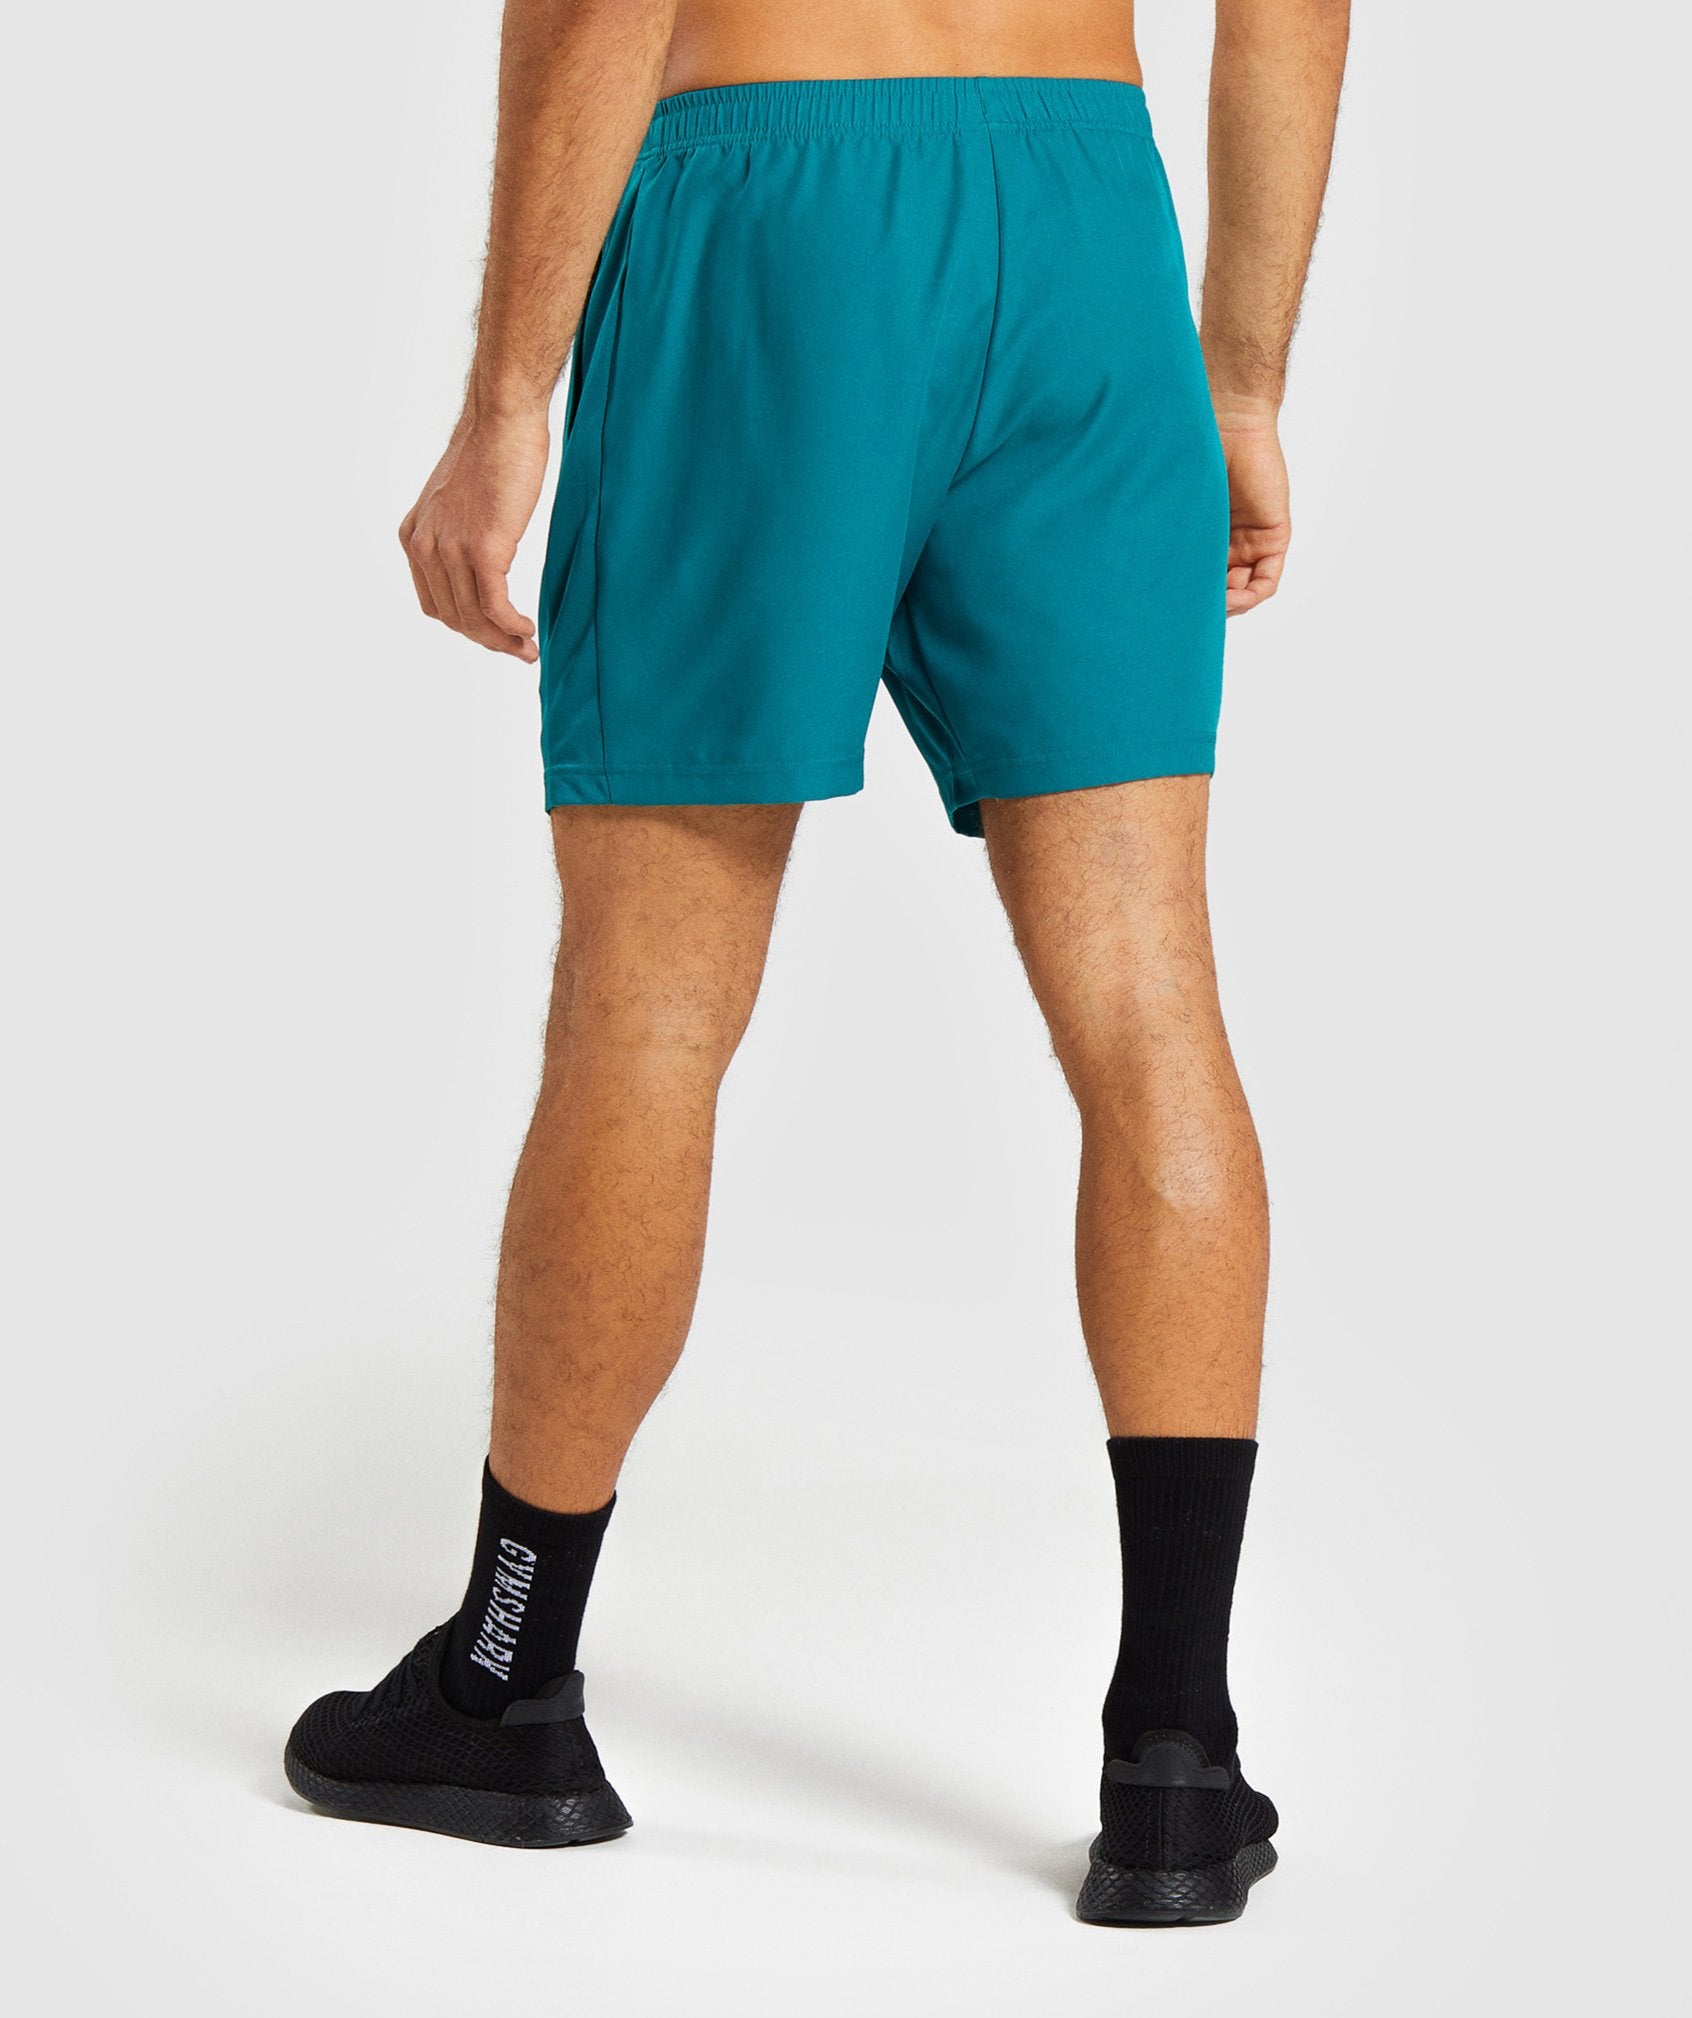 Gymshark Sport Shorts - Charged Emerald Image B